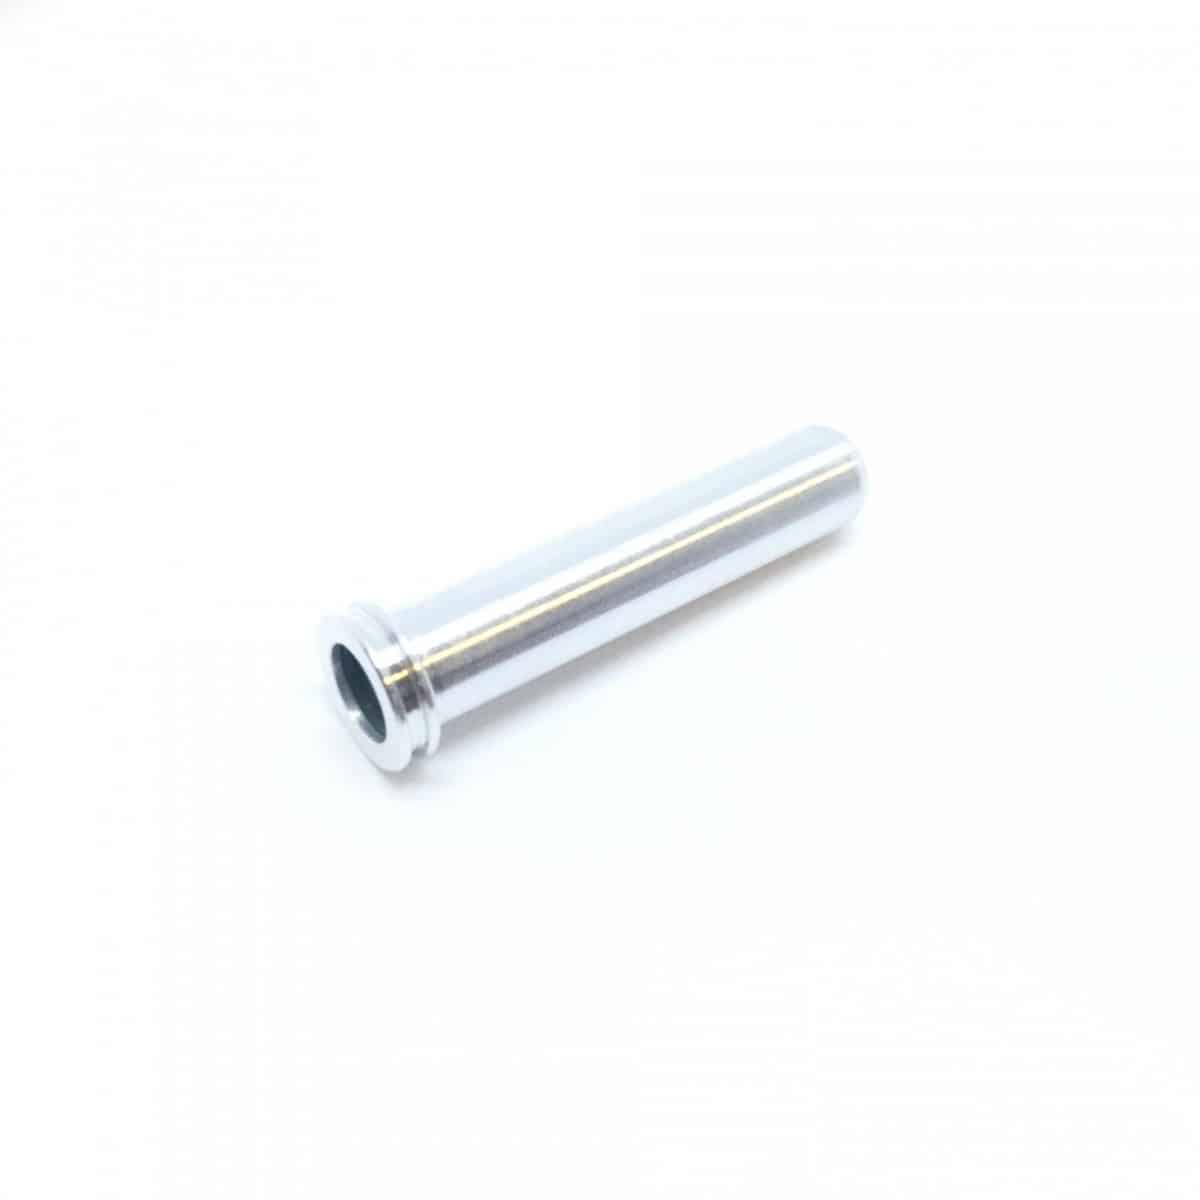 Nozzle length BREN ASG: Standard - 34.1mm